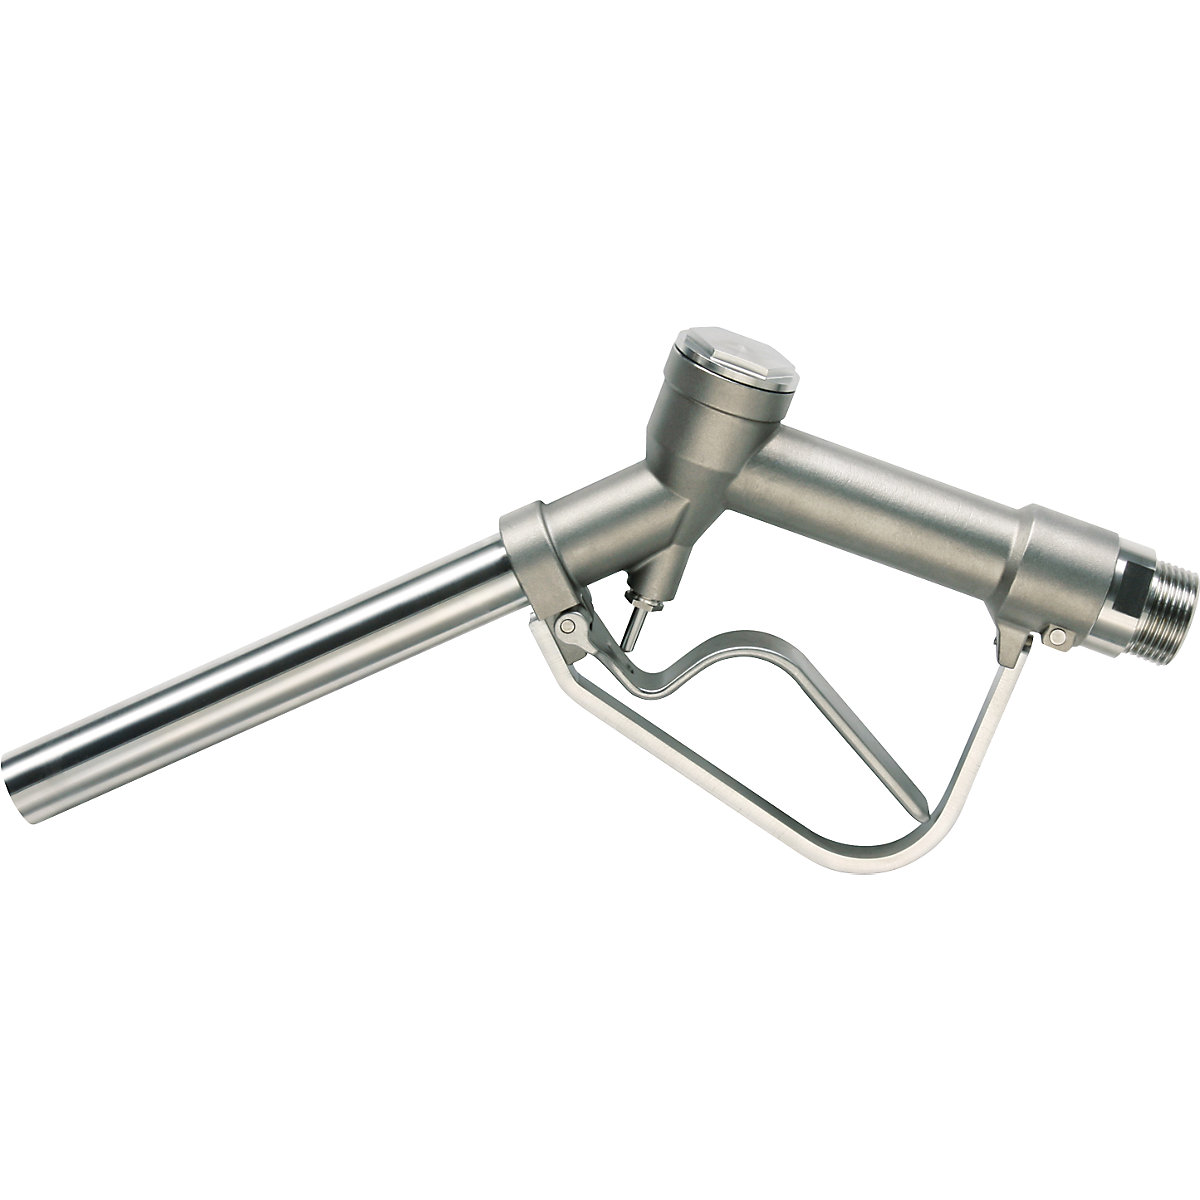 Pistola erogatrice manuale in acciaio inox 1.4571 - Jessberger